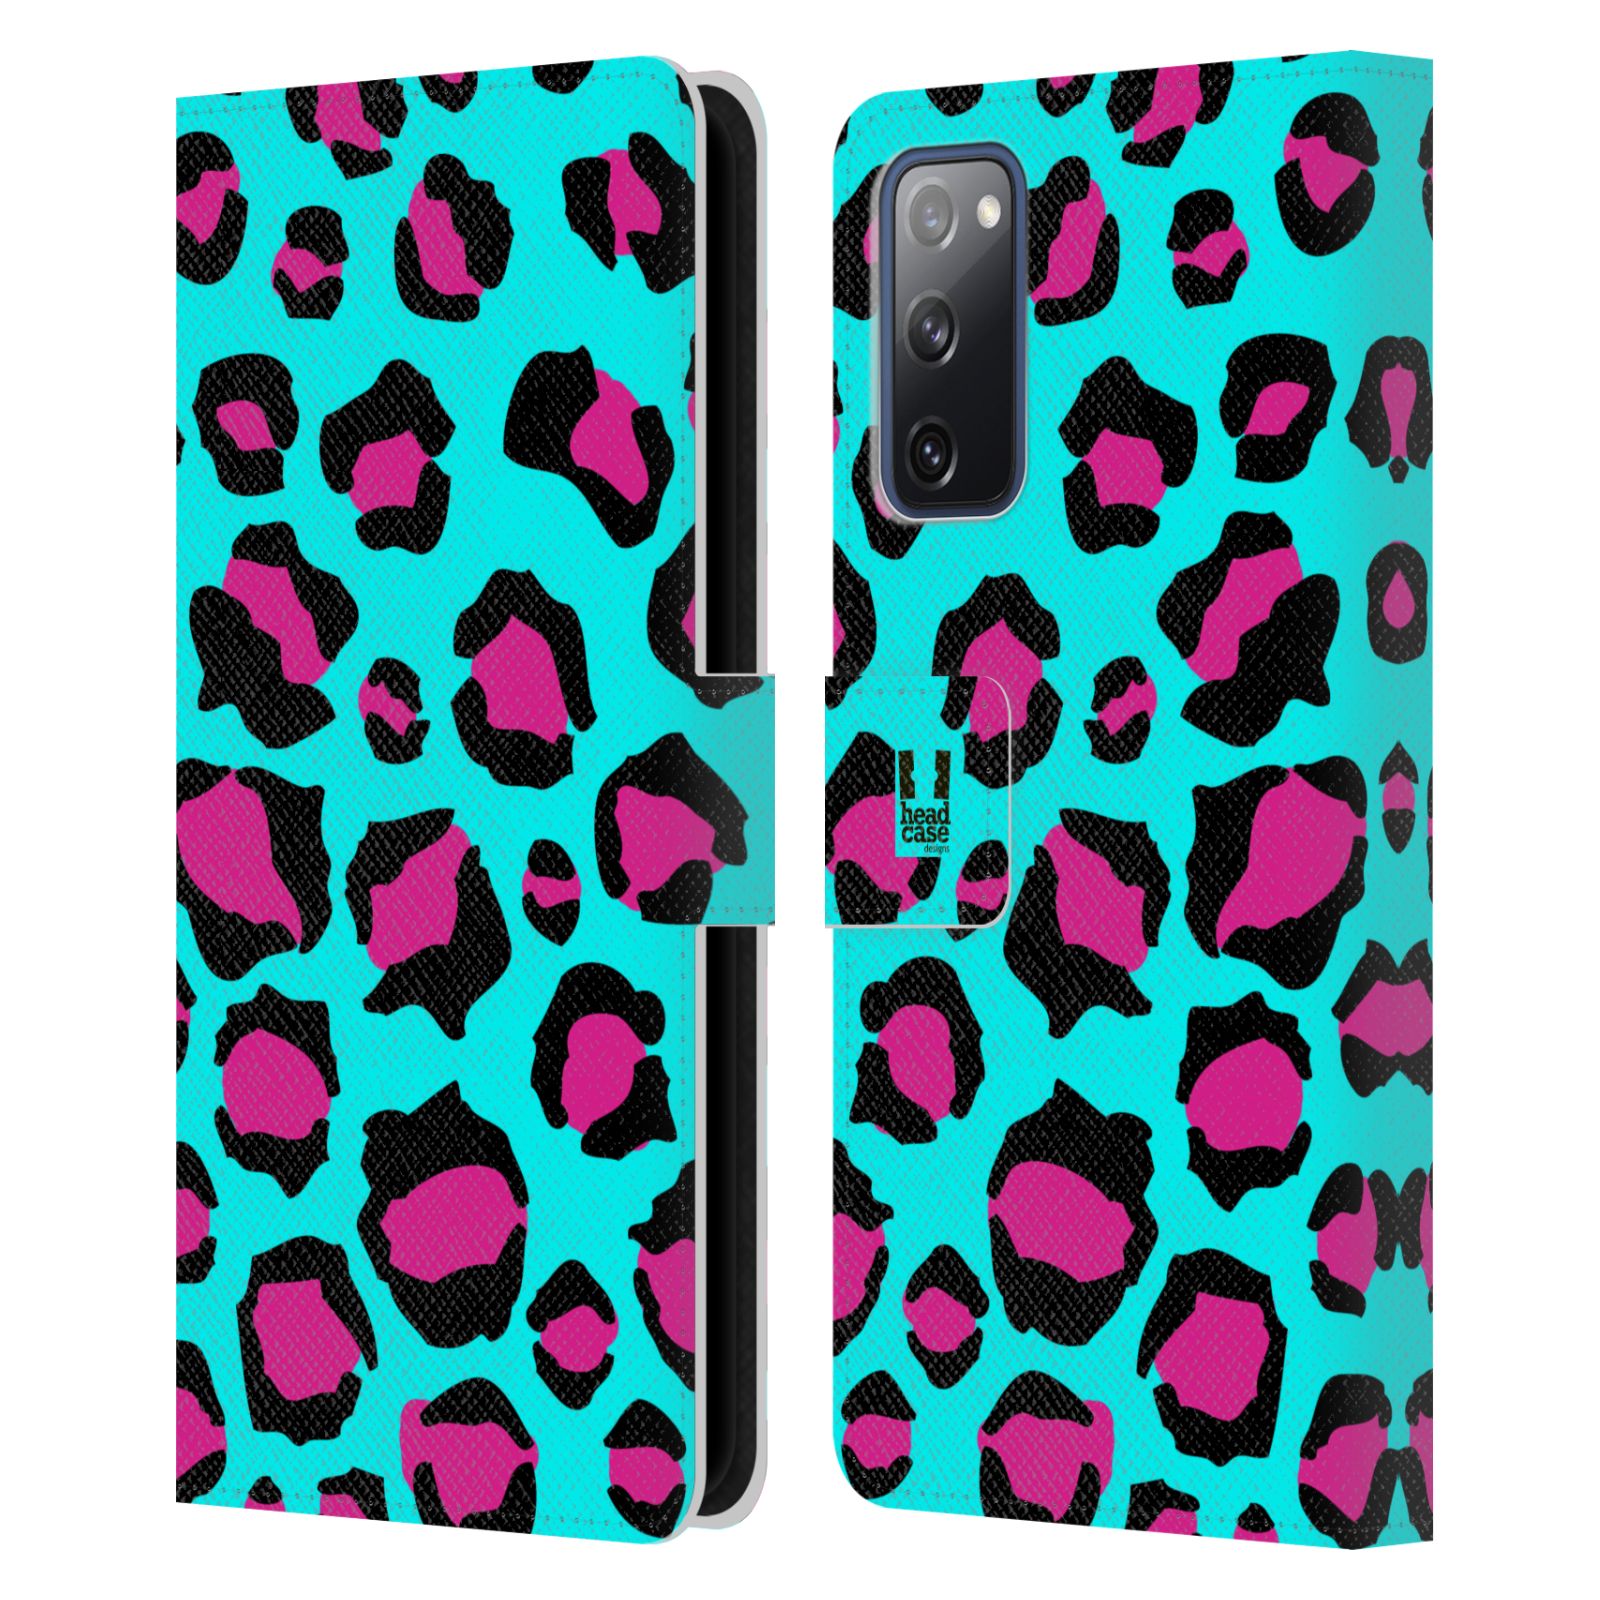 Pouzdro na mobil Samsung Galaxy S20 FE / S20 FE 5G  - HEAD CASE - Magický vzor leopard